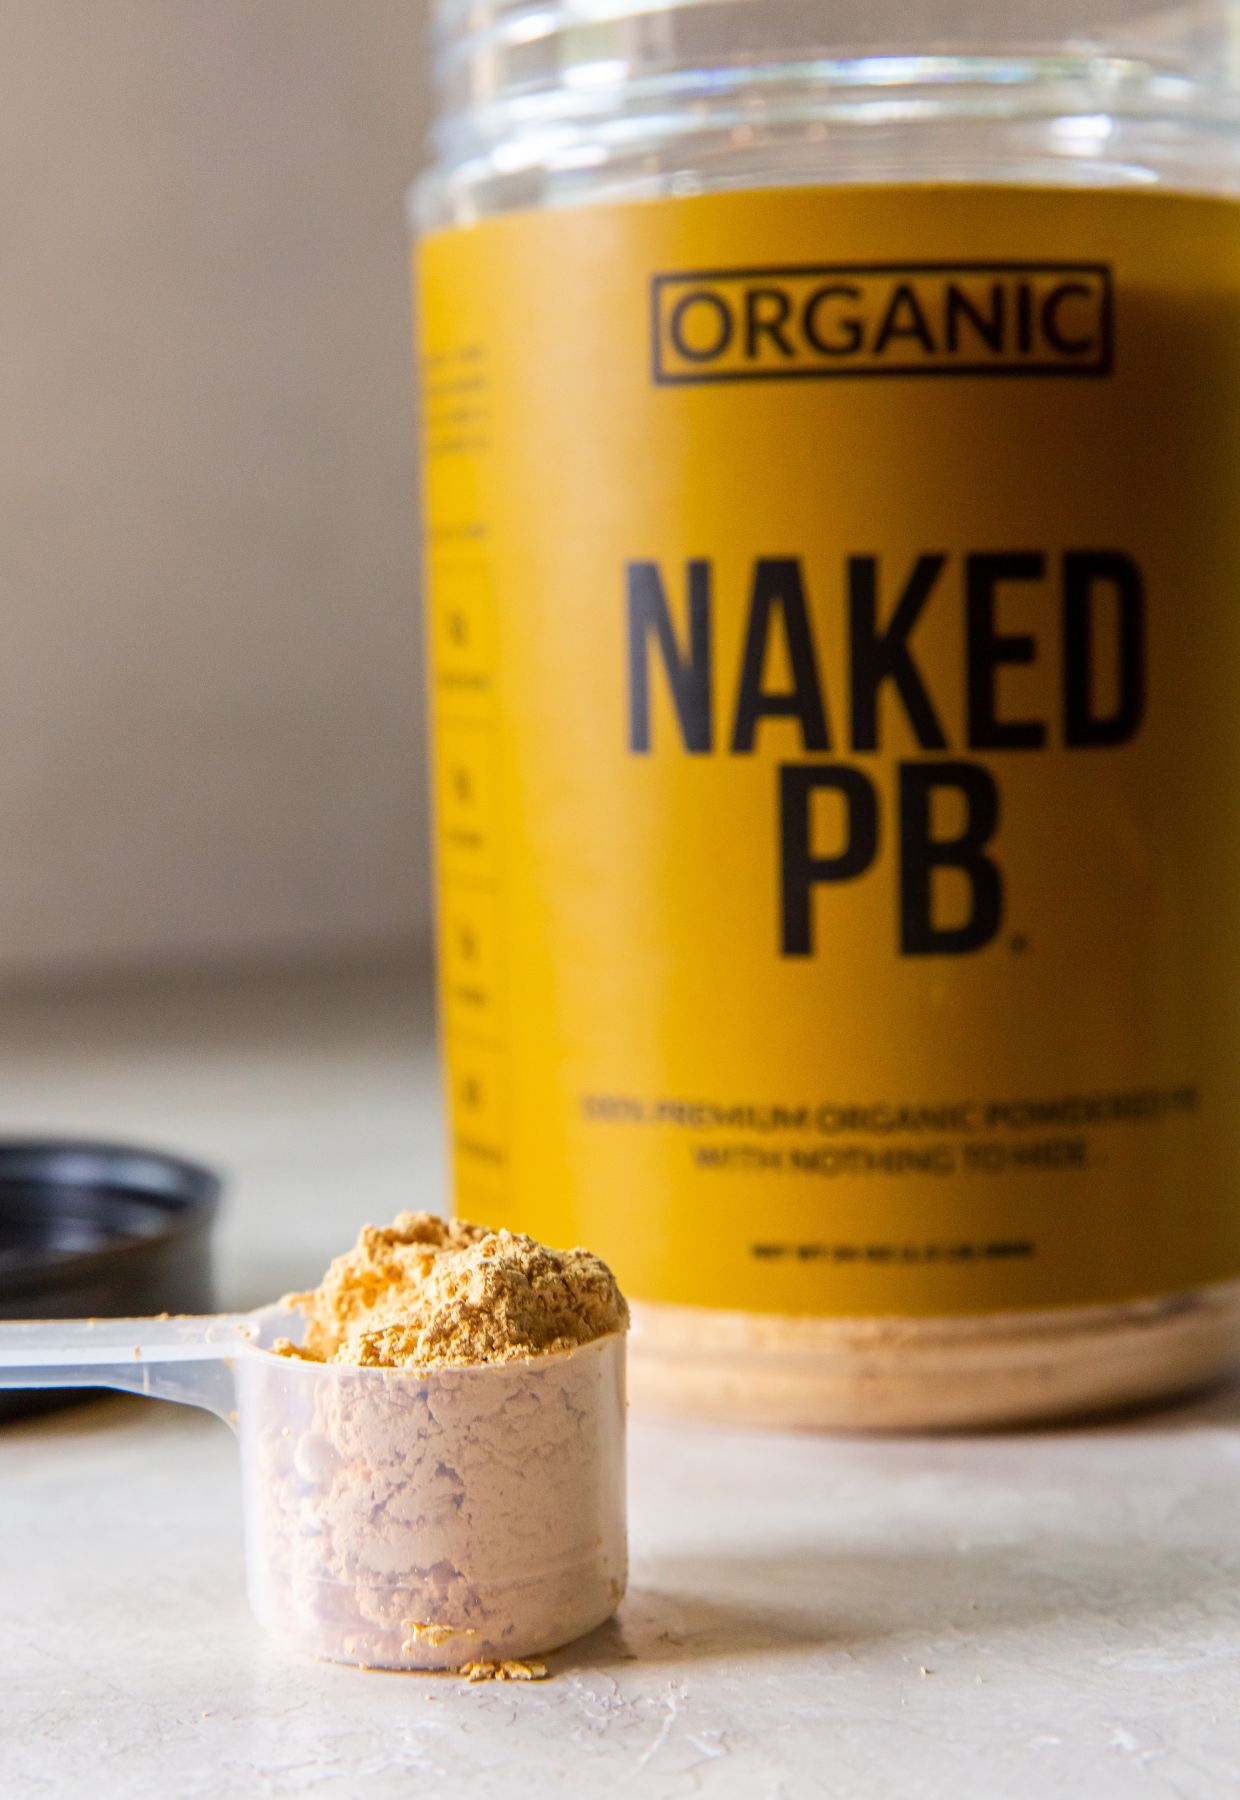 Organic naked pb powder next to a jar.